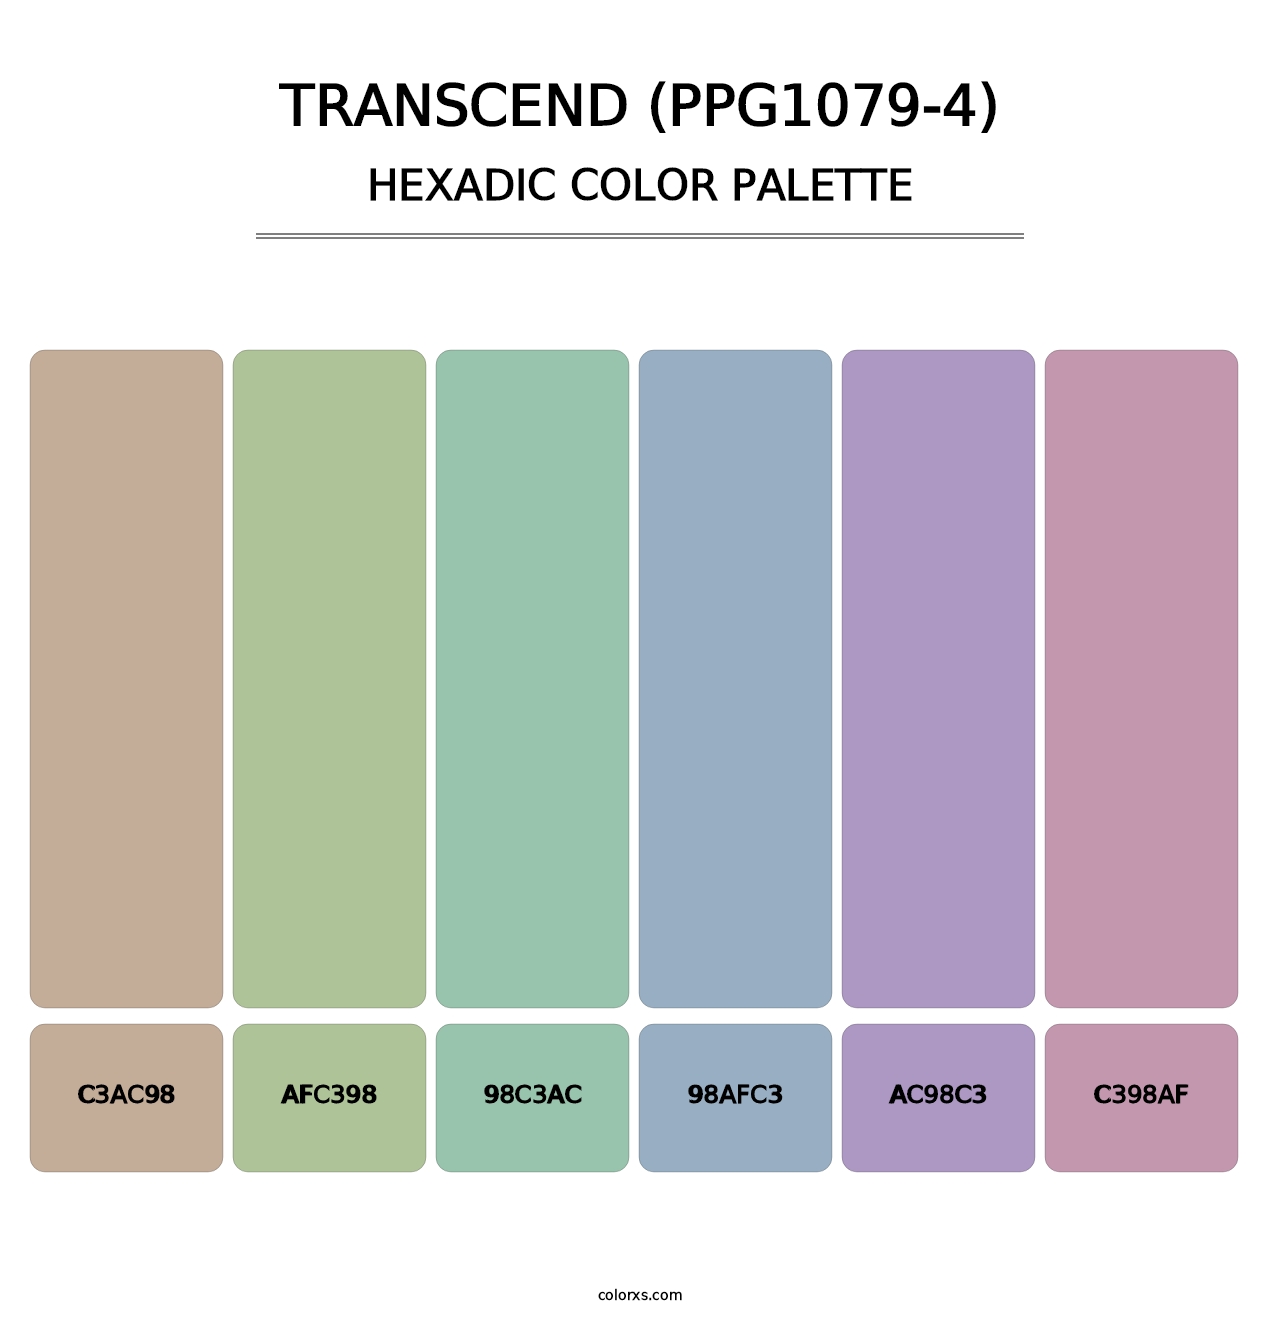 Transcend (PPG1079-4) - Hexadic Color Palette